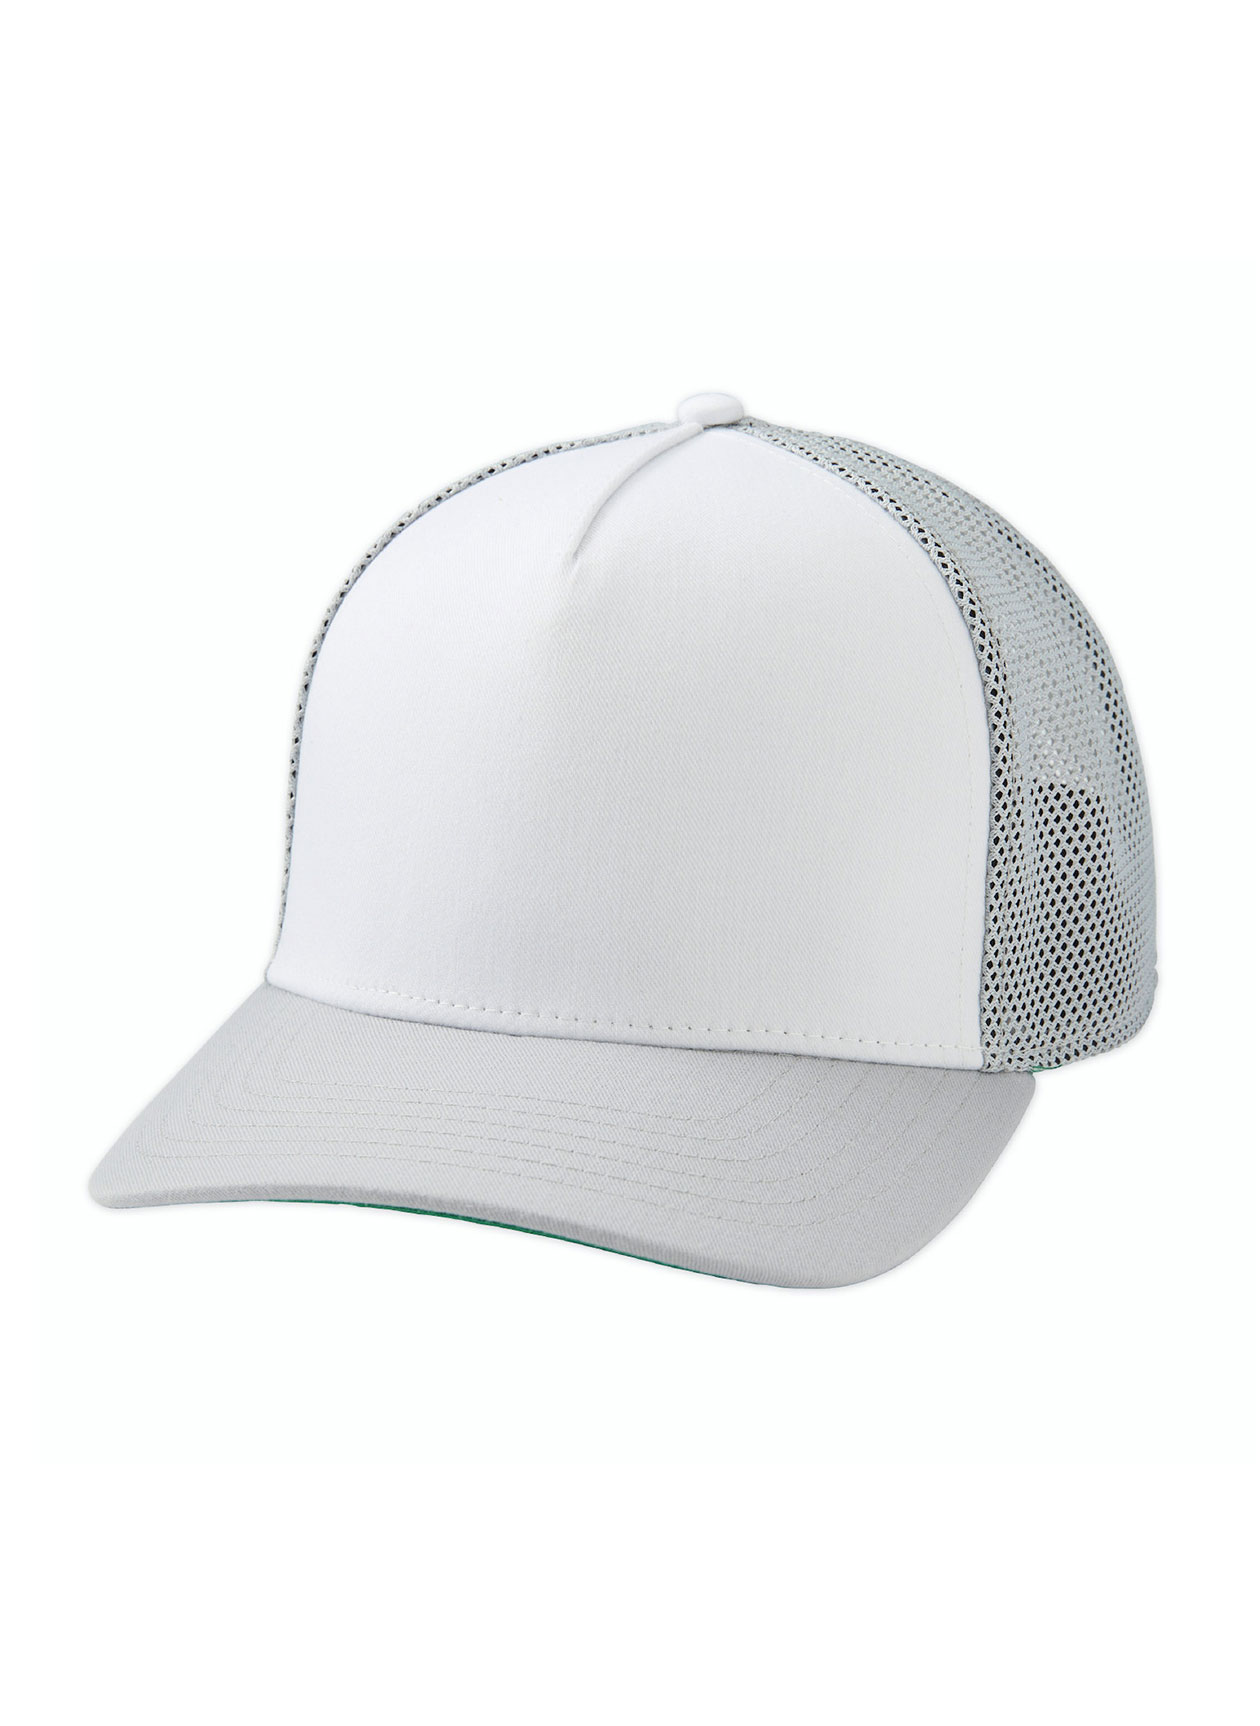 Linksoul White Men's Trucker Hat